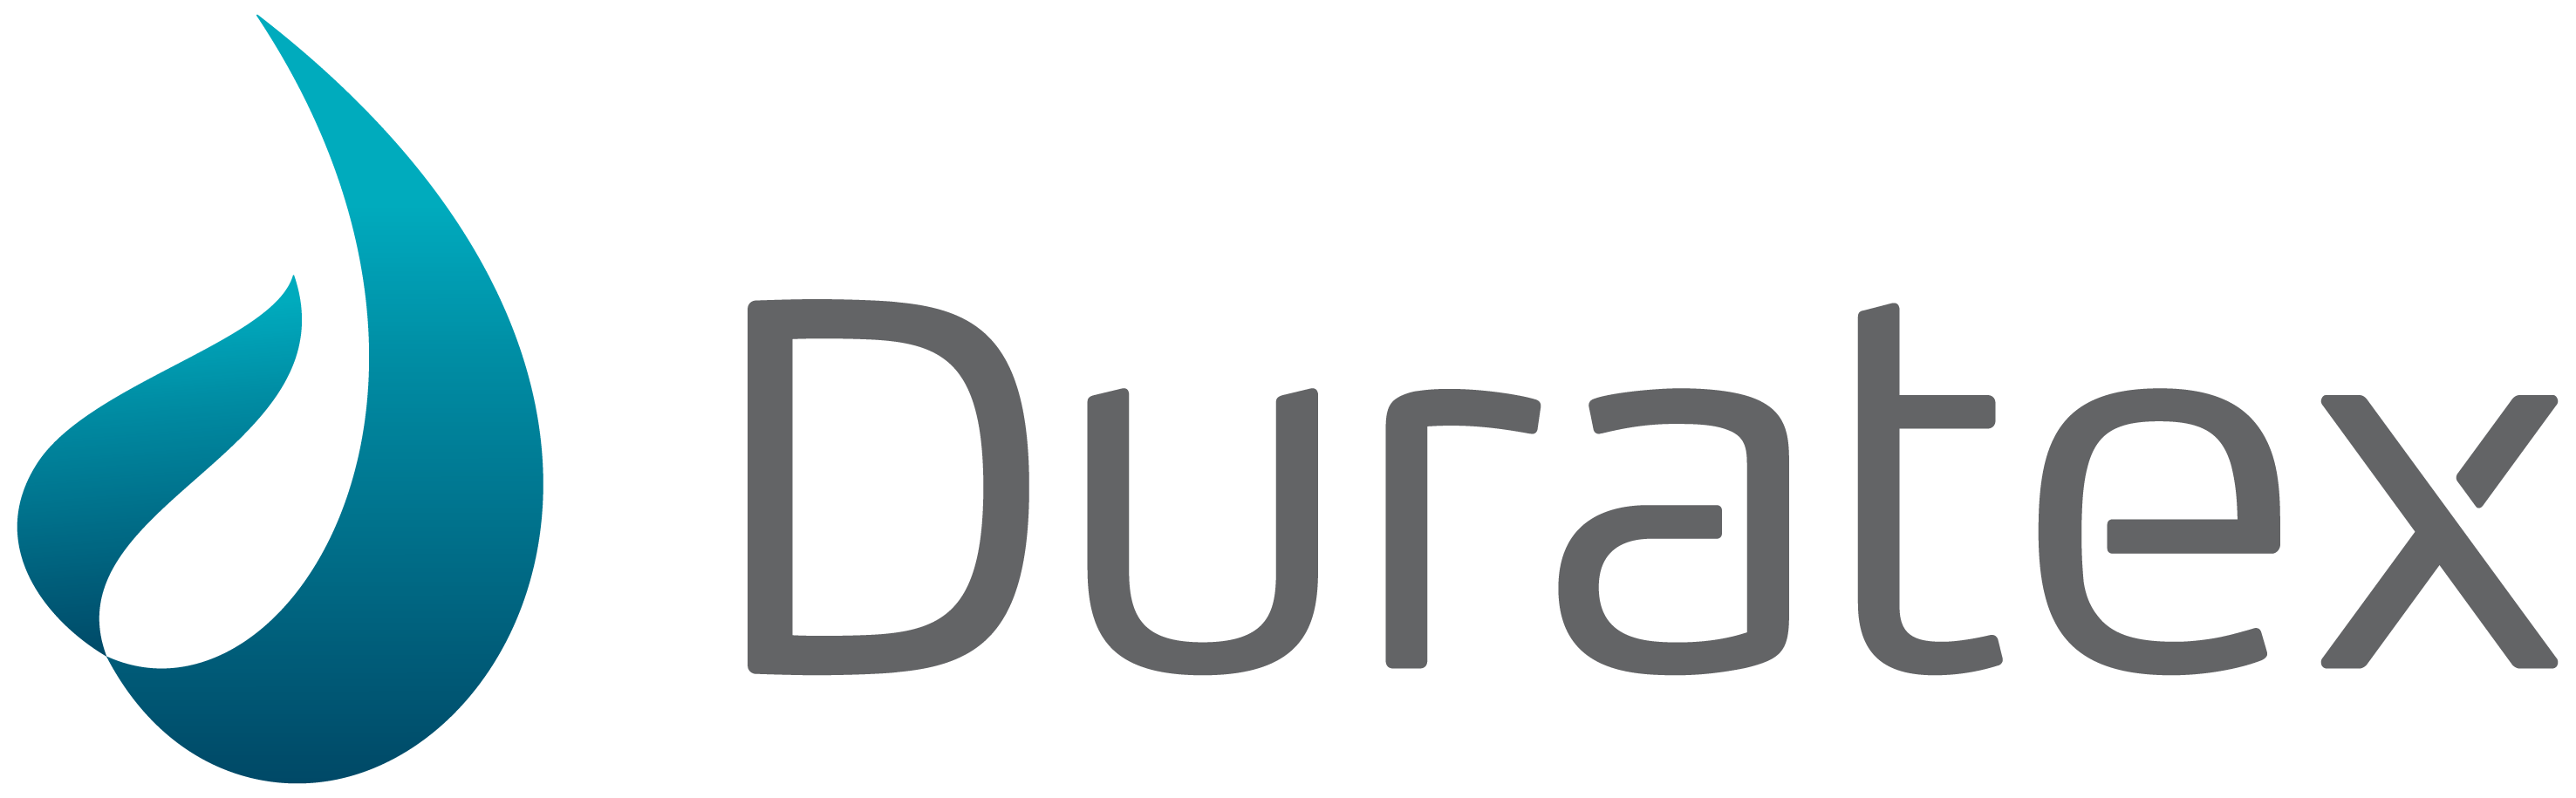 Duratex Brand Logo